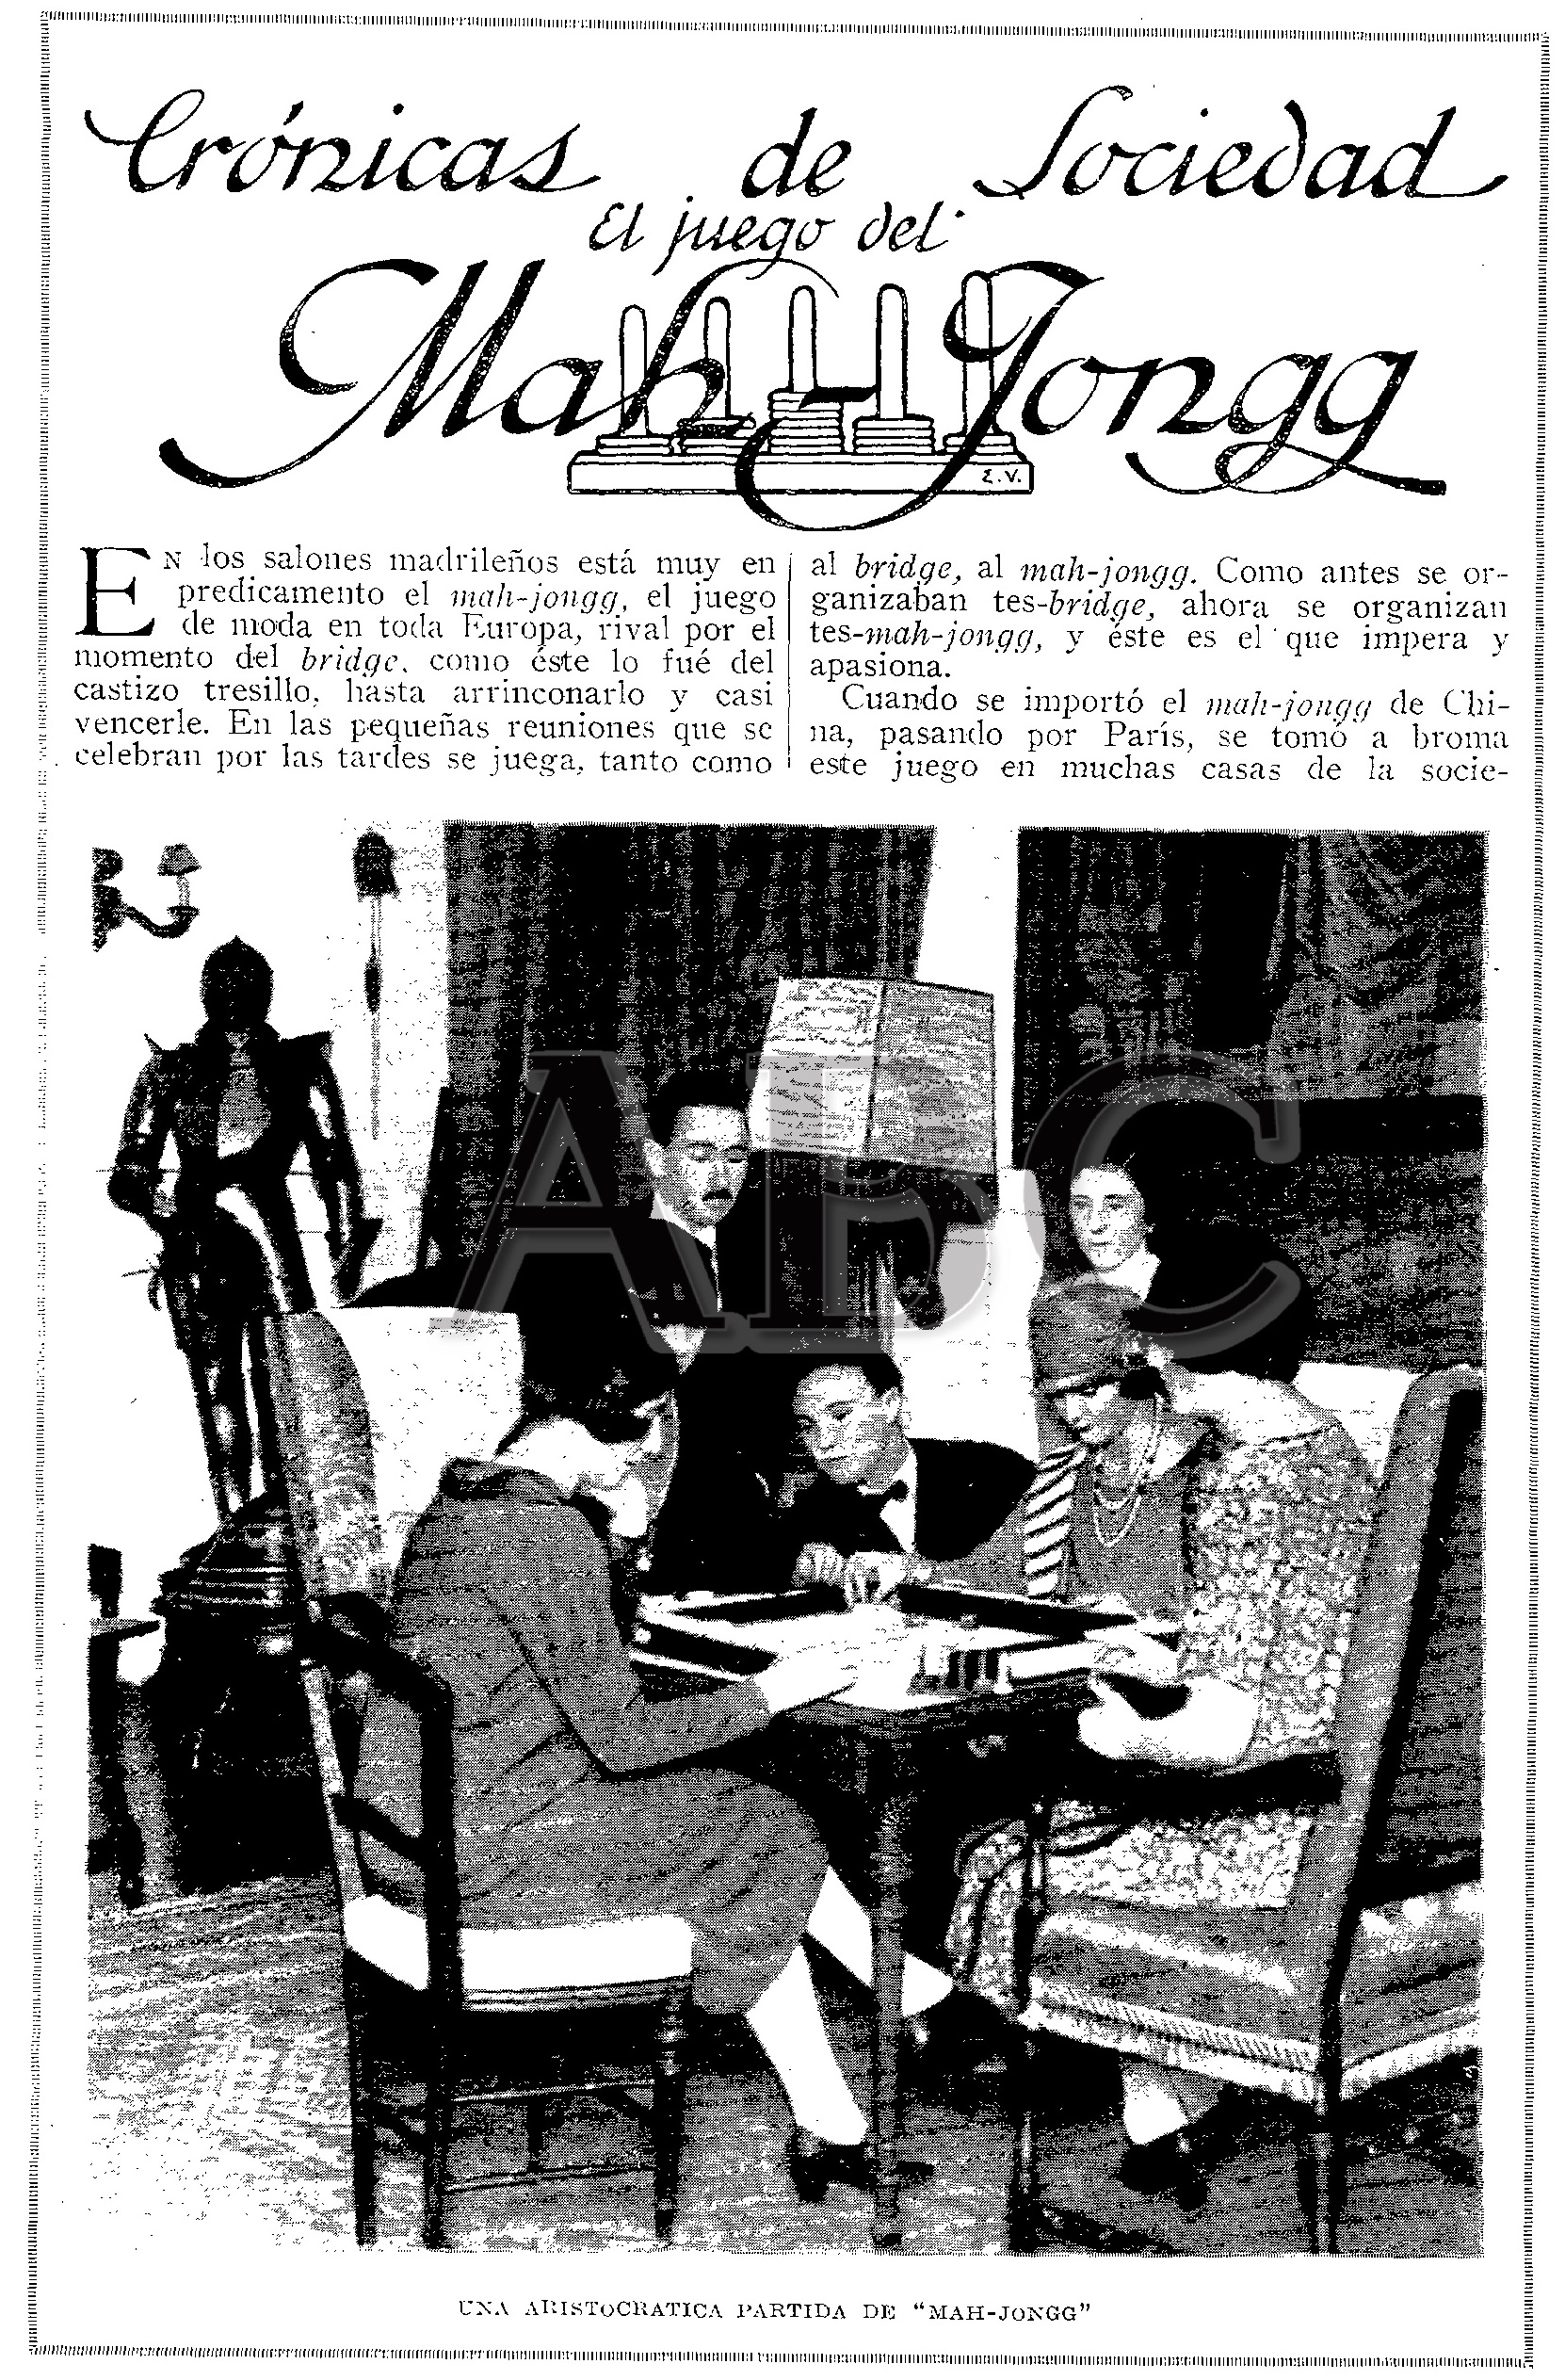 Crónica del ABC de Febrero de 1925